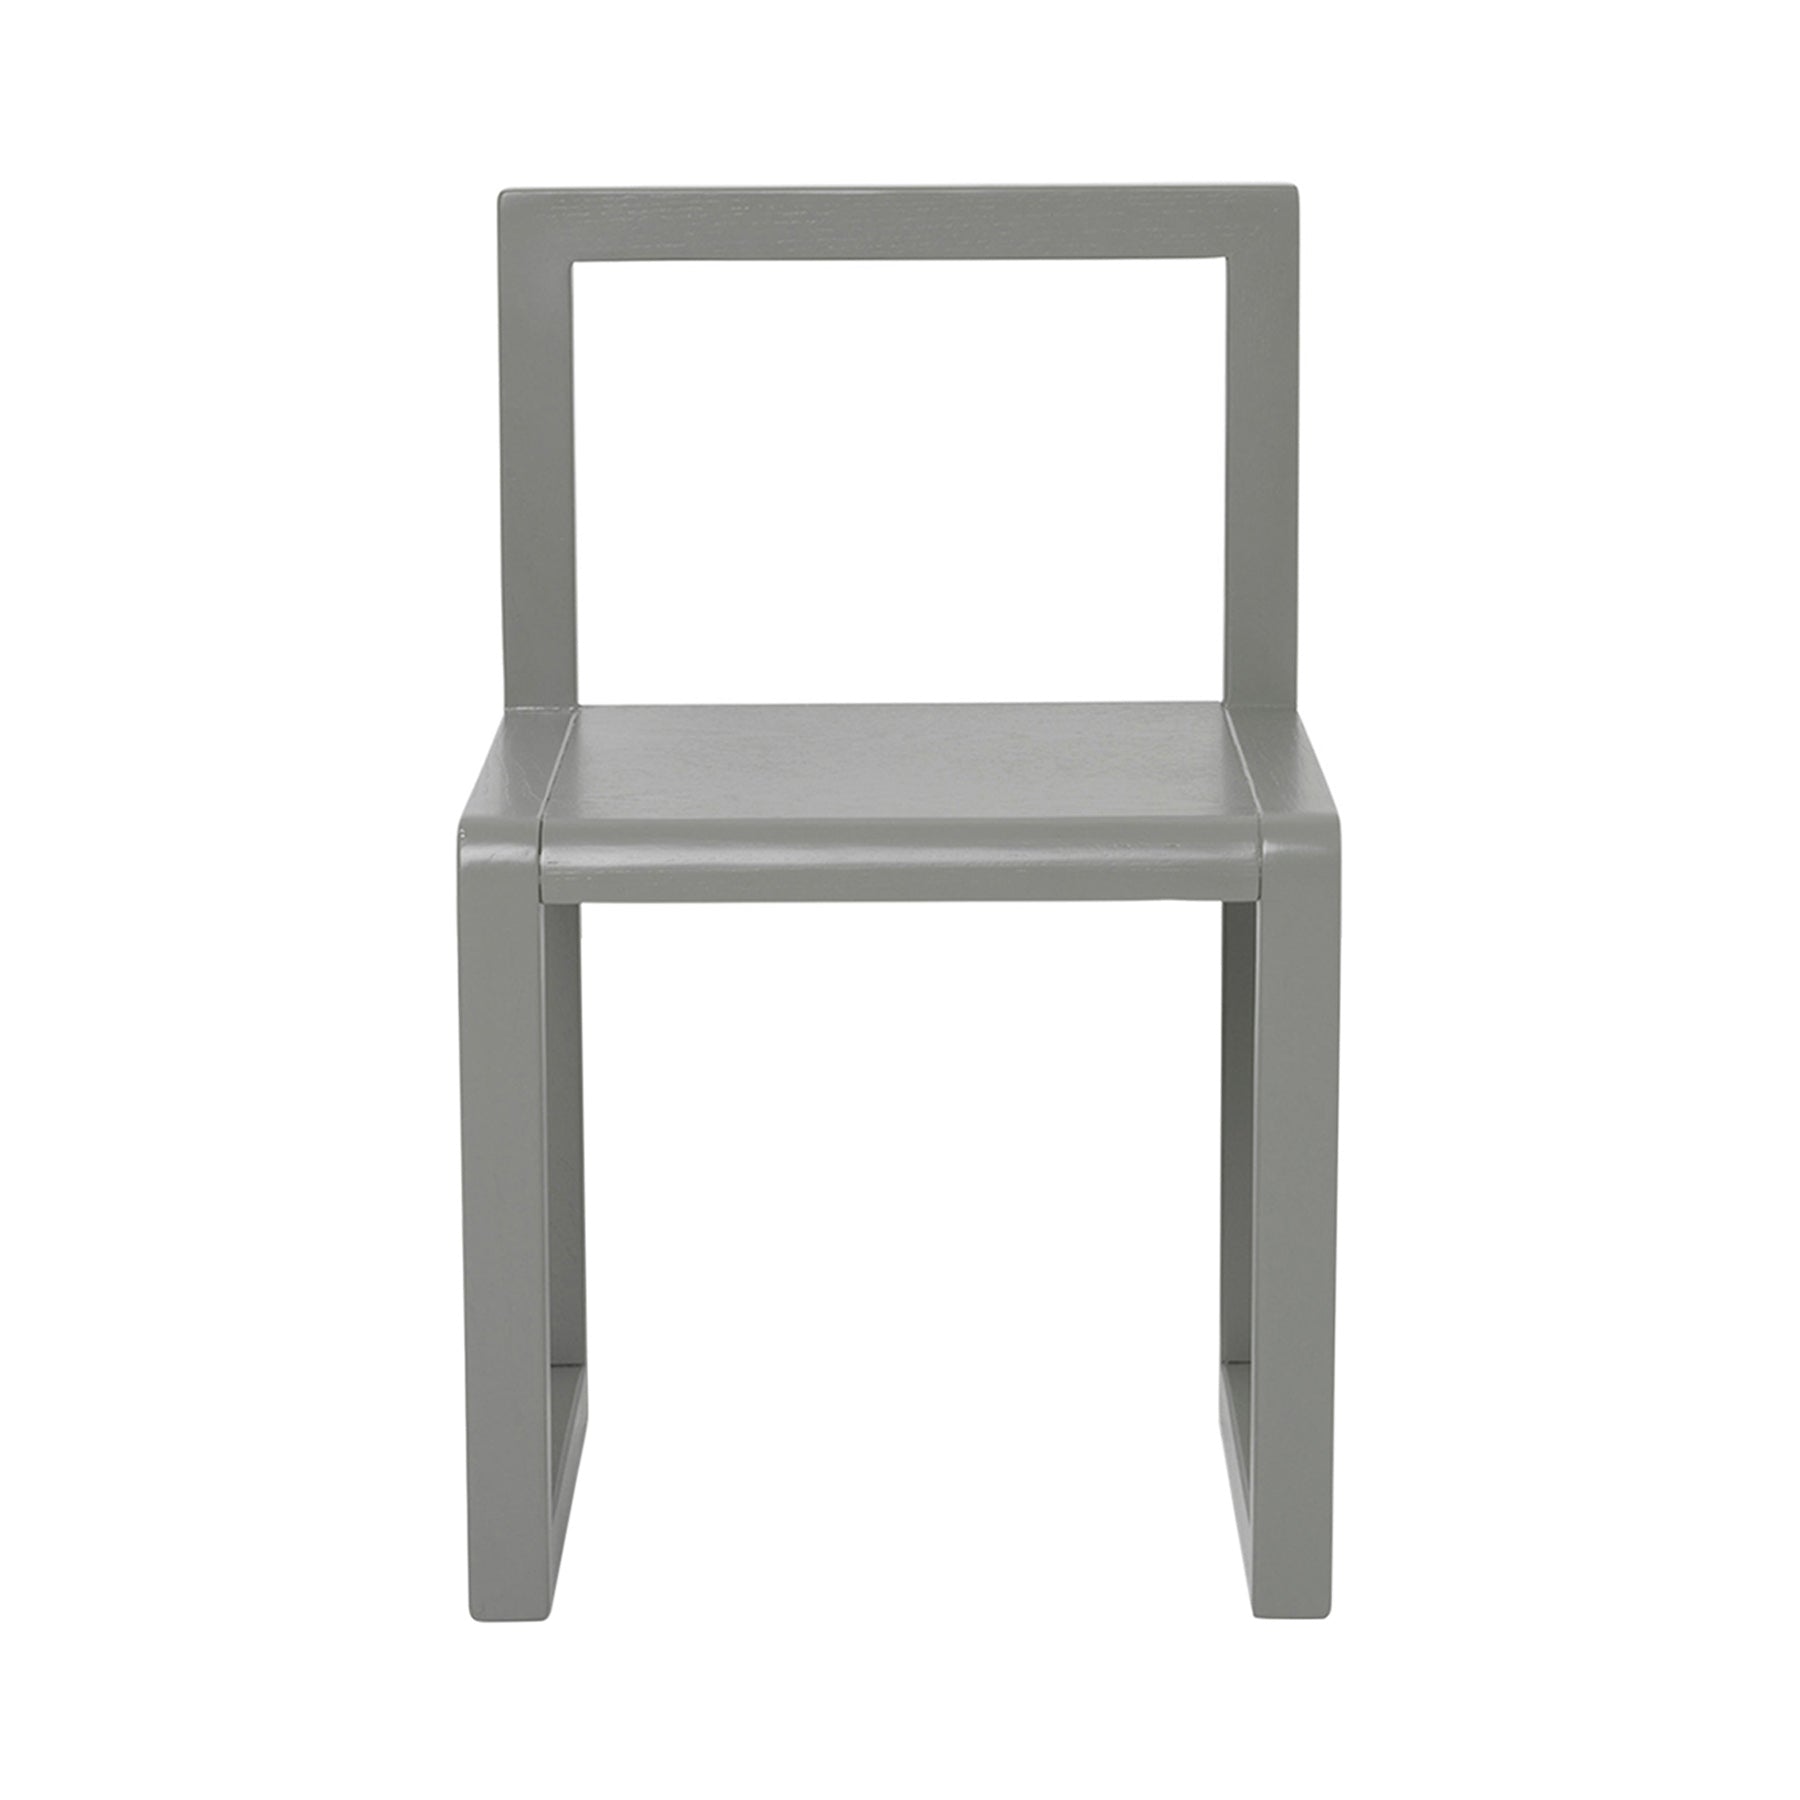 Little Architect Chair: Grey